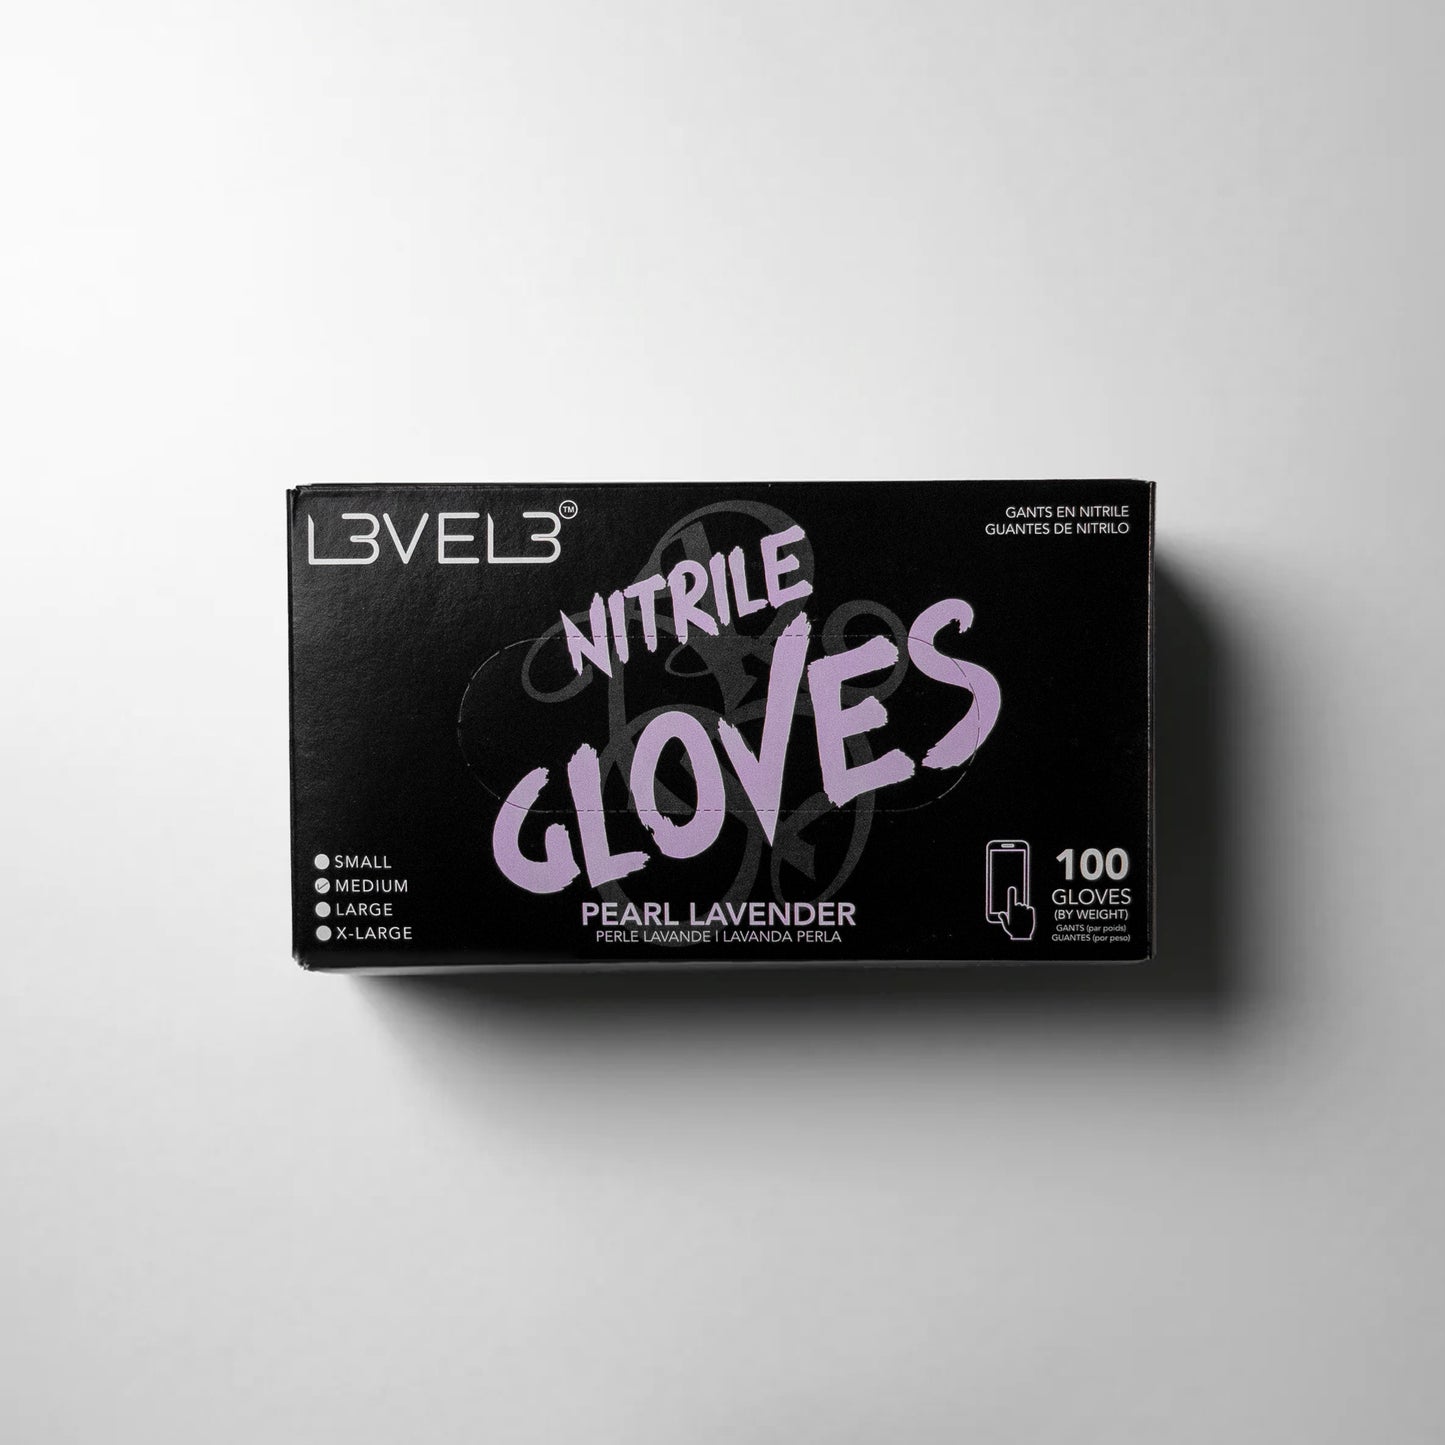 Level 3 Nitrile Gloves Pearl Lavender